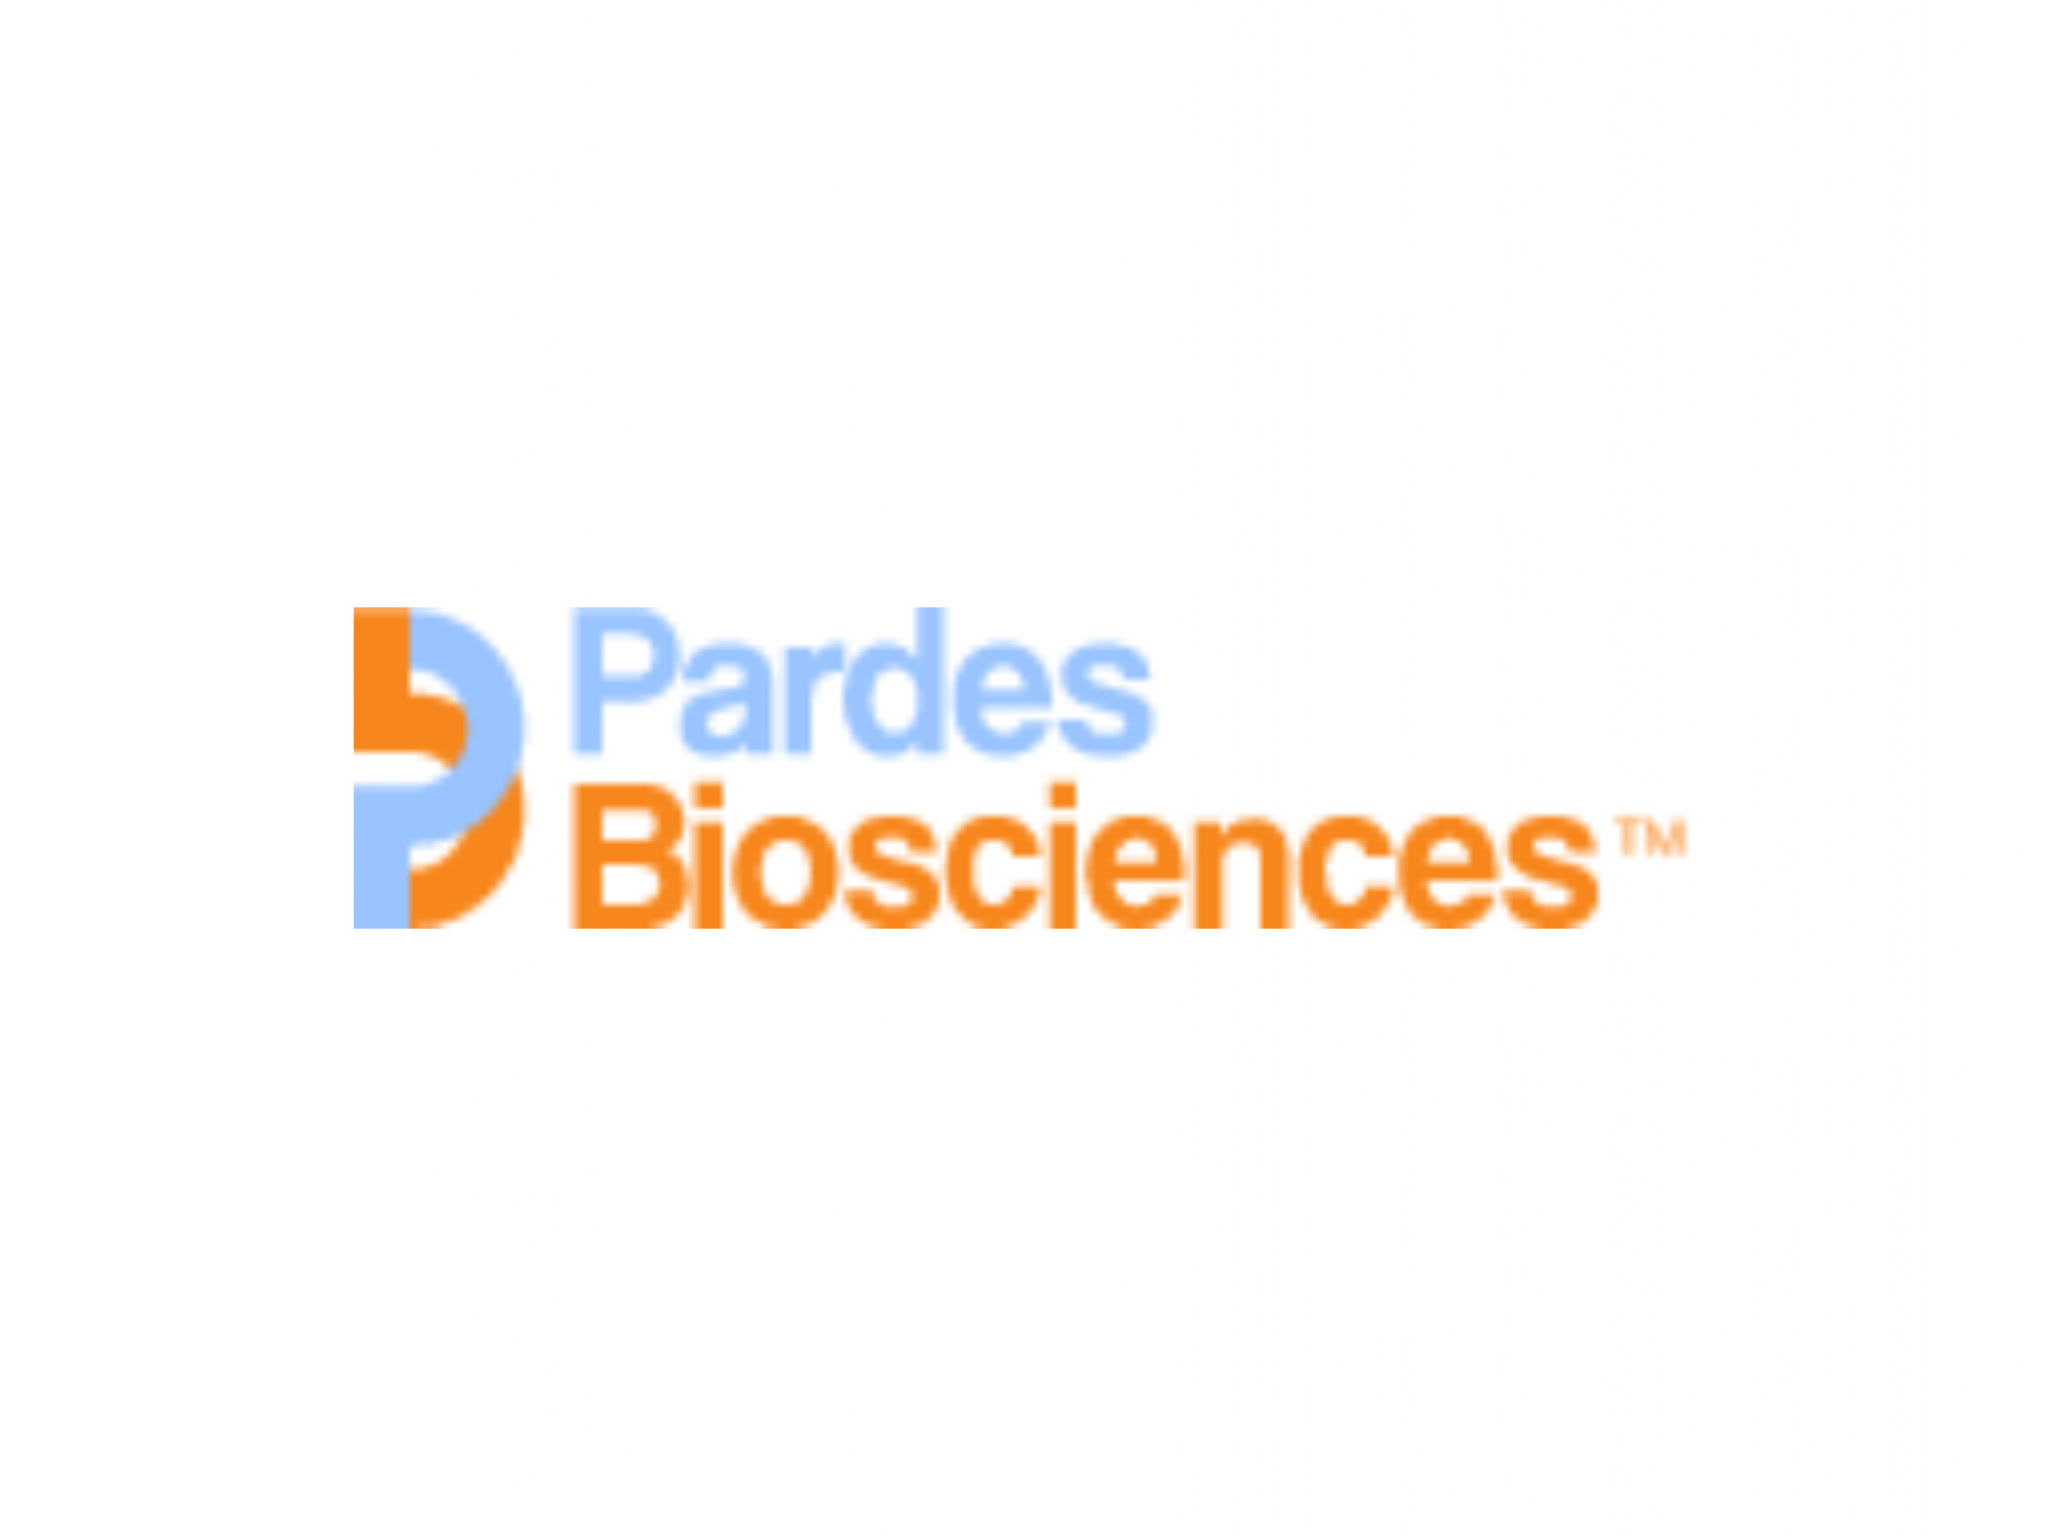  pardes-biosciences-looks-for-alternatives-after-failed-covid-19-study 